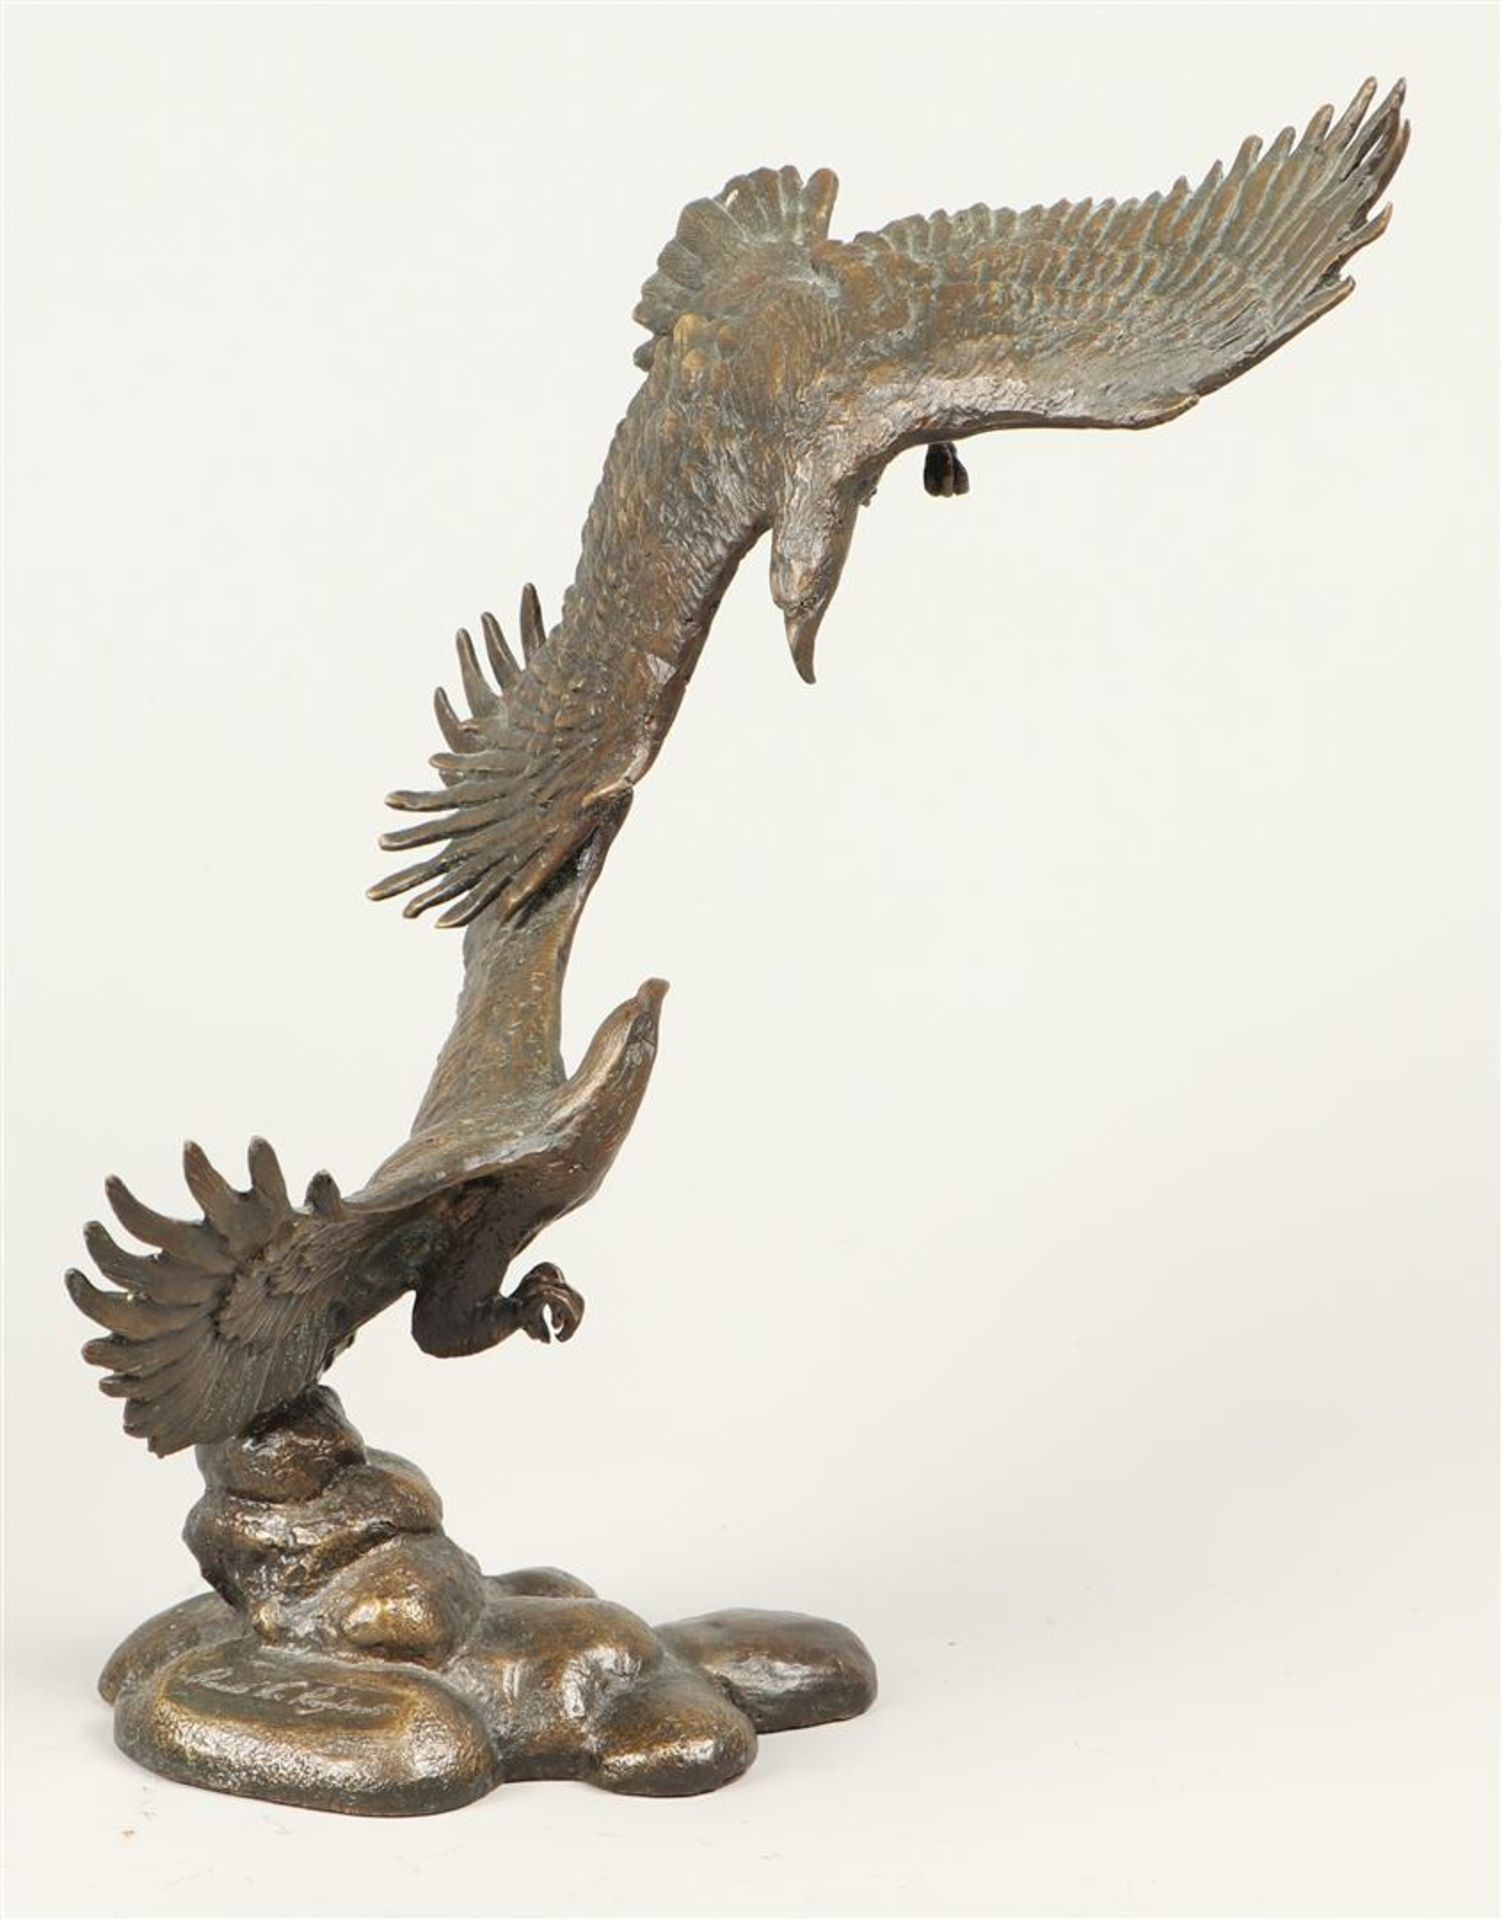 Bronze sculpture "Guardians of the Skies", By Ronald van Ru